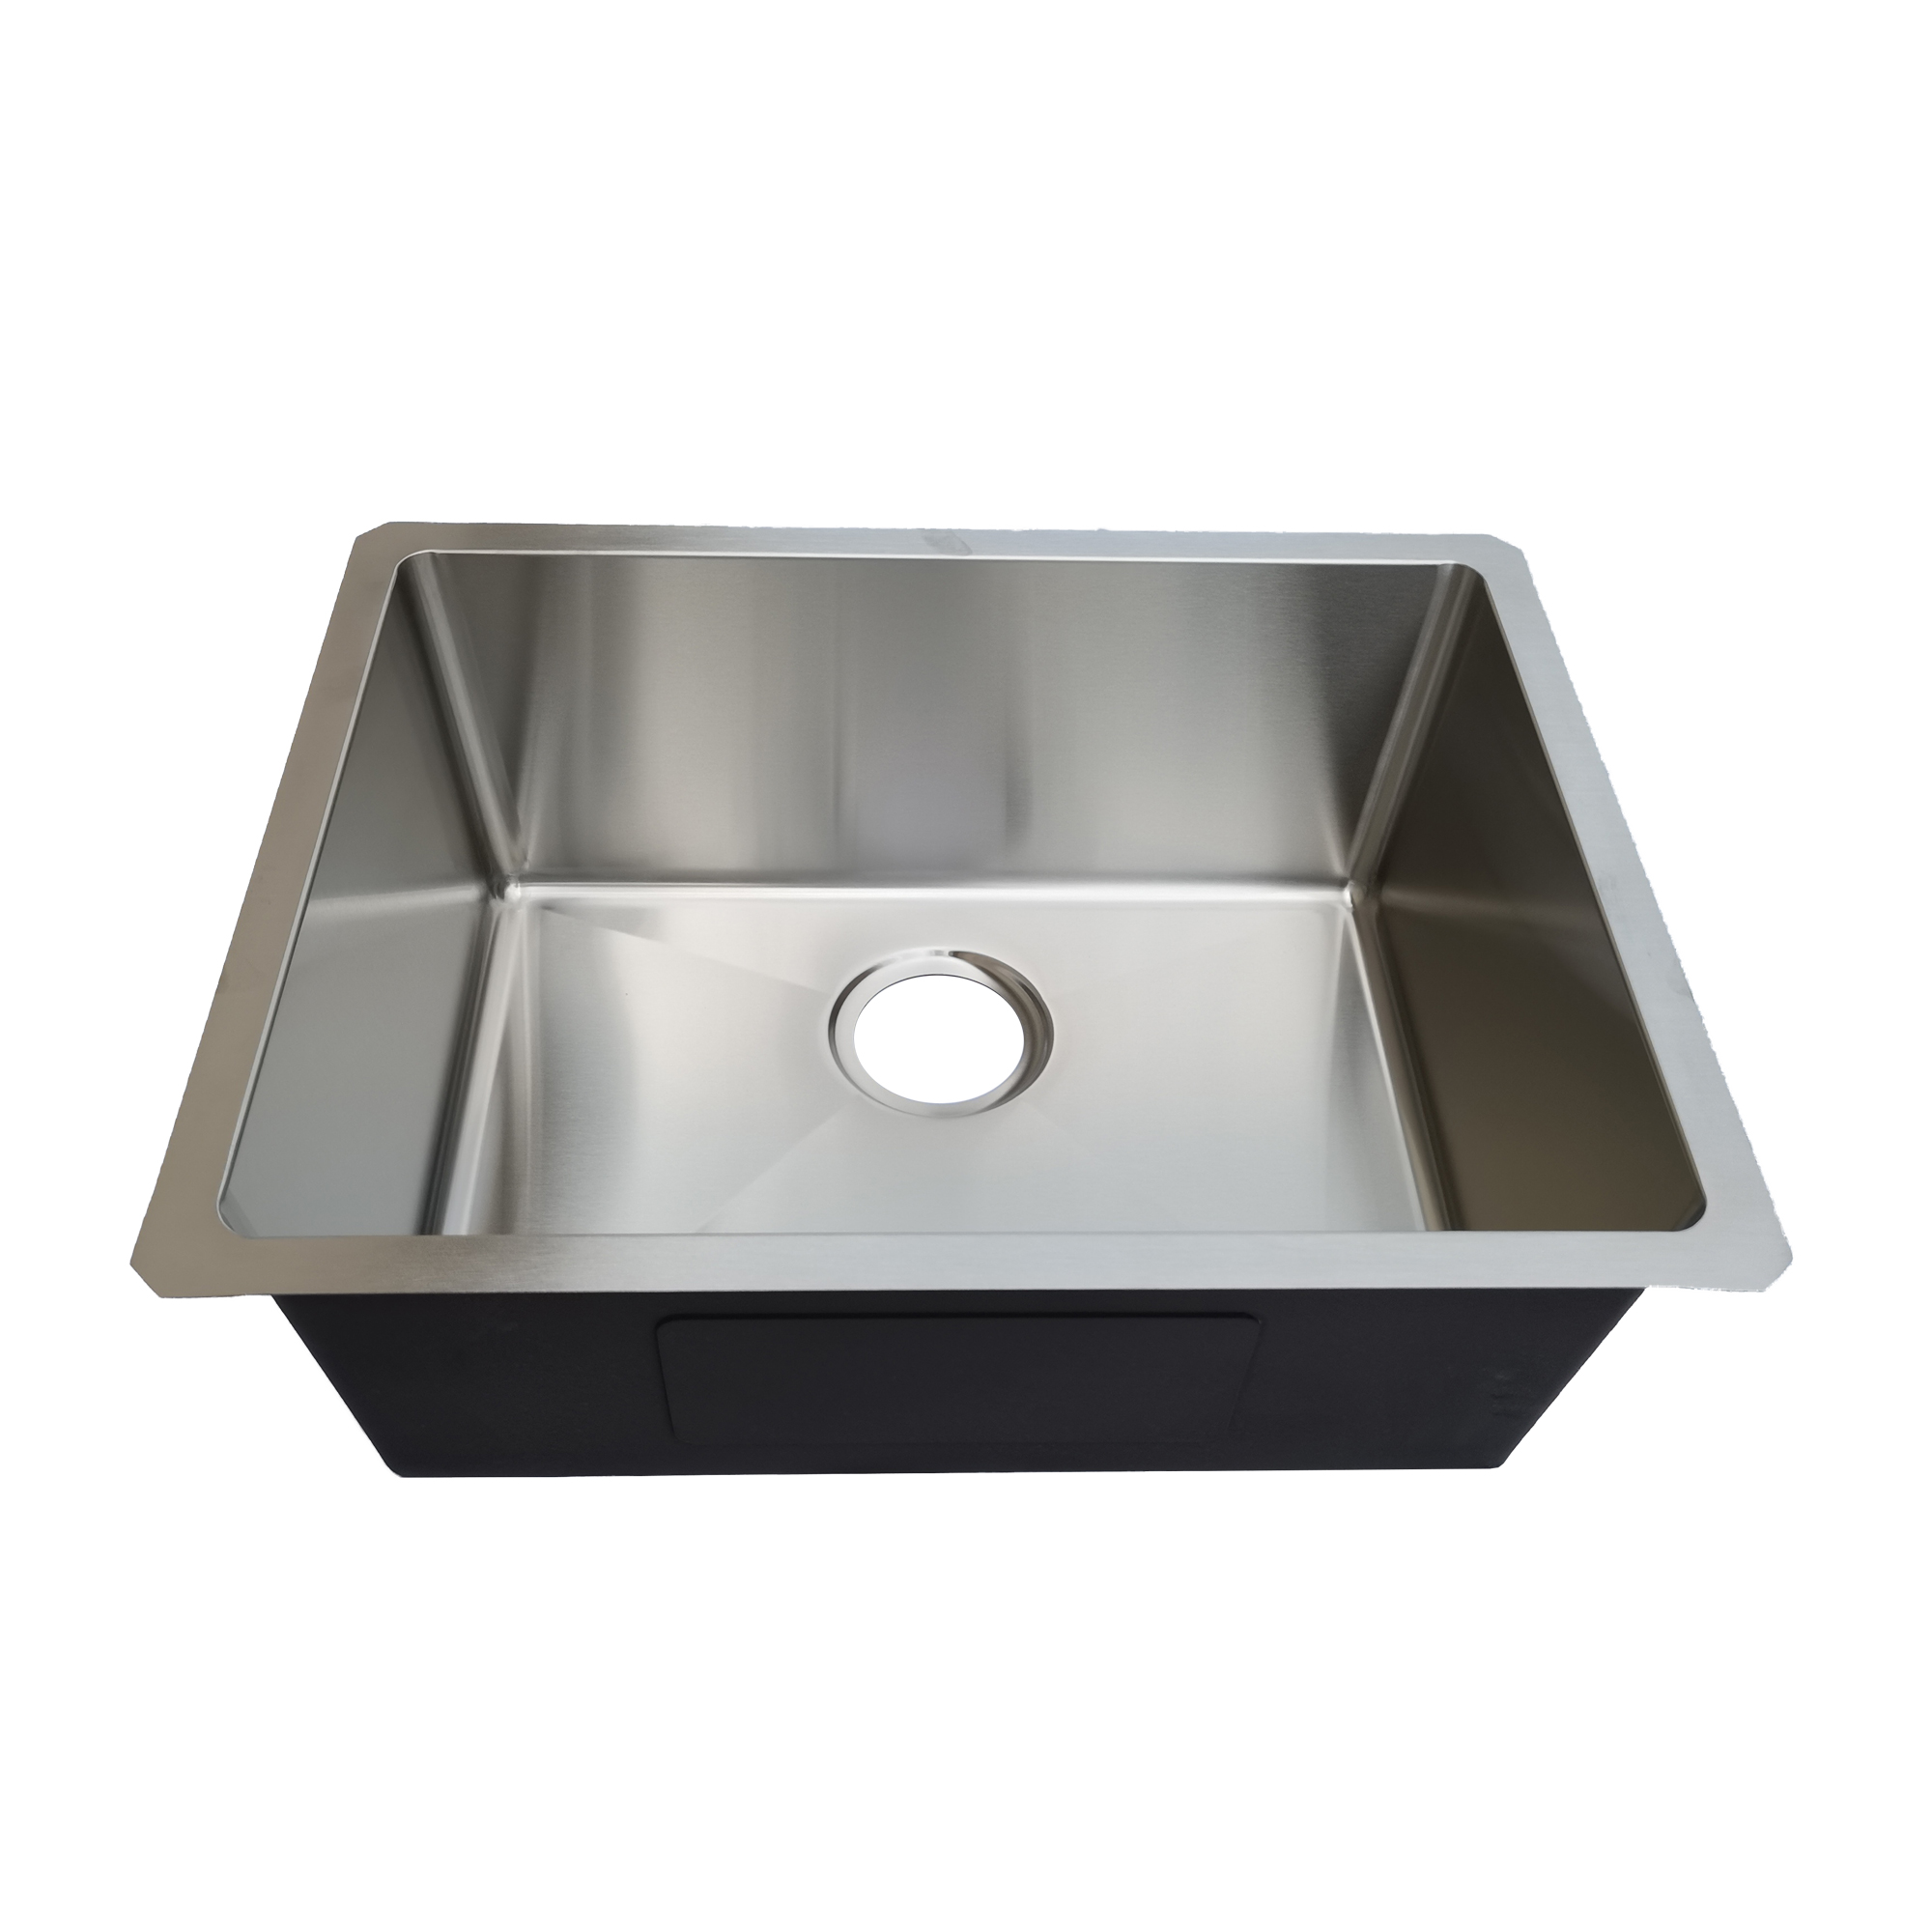 Stainless Steel Sink Accessories  Stainless Steel Kitchen Sinks -Aliexpress